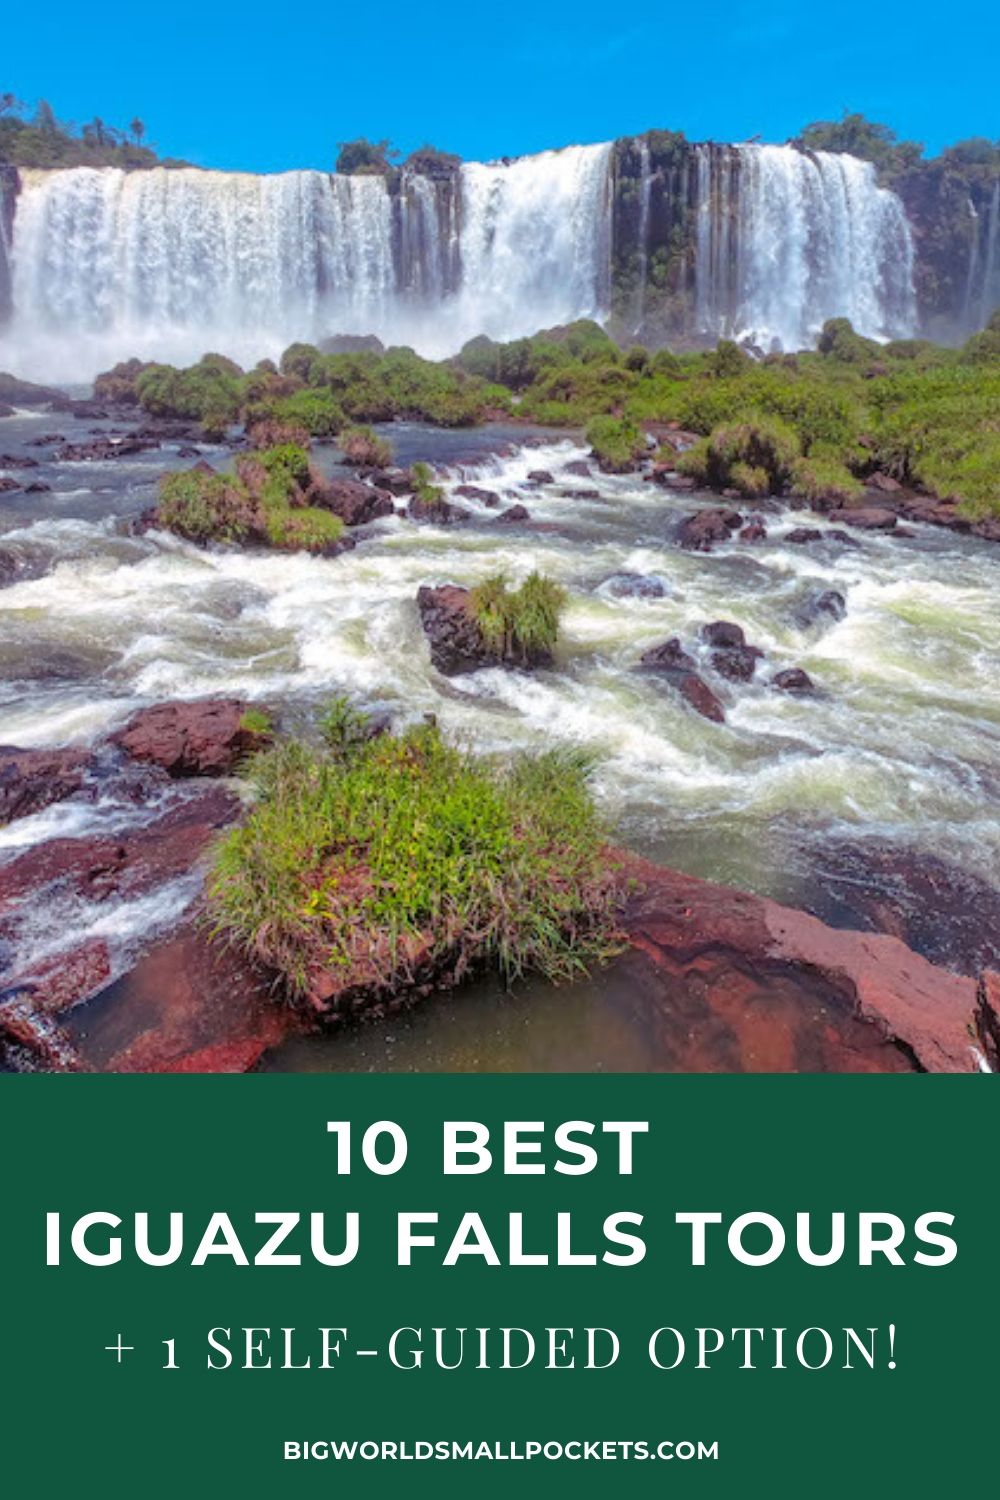 The 10 Best Iguazu Falls Tours